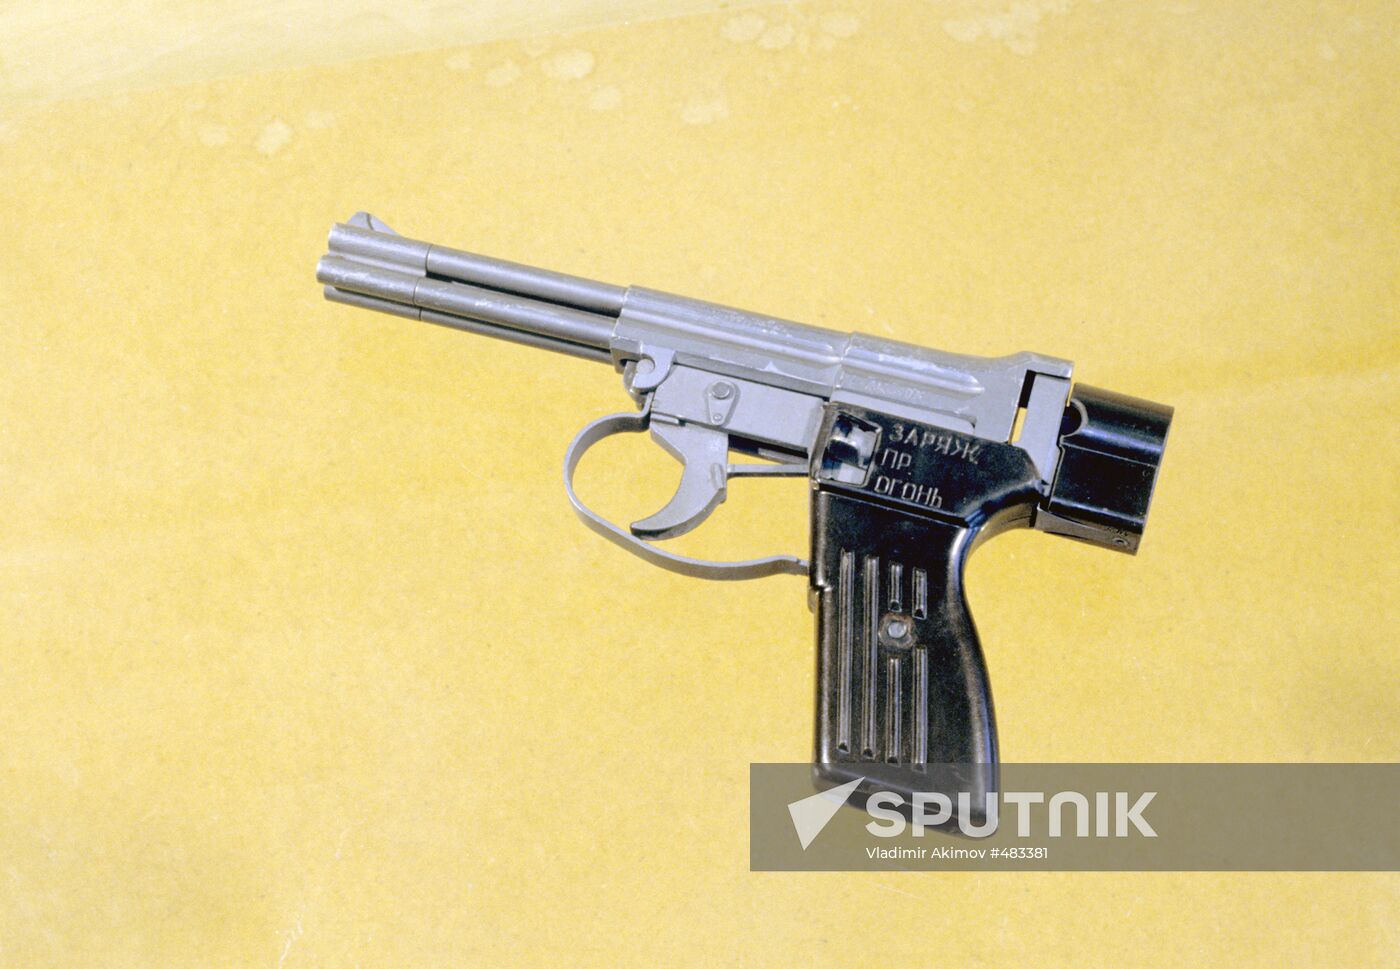 Four-barreled underwater pistol